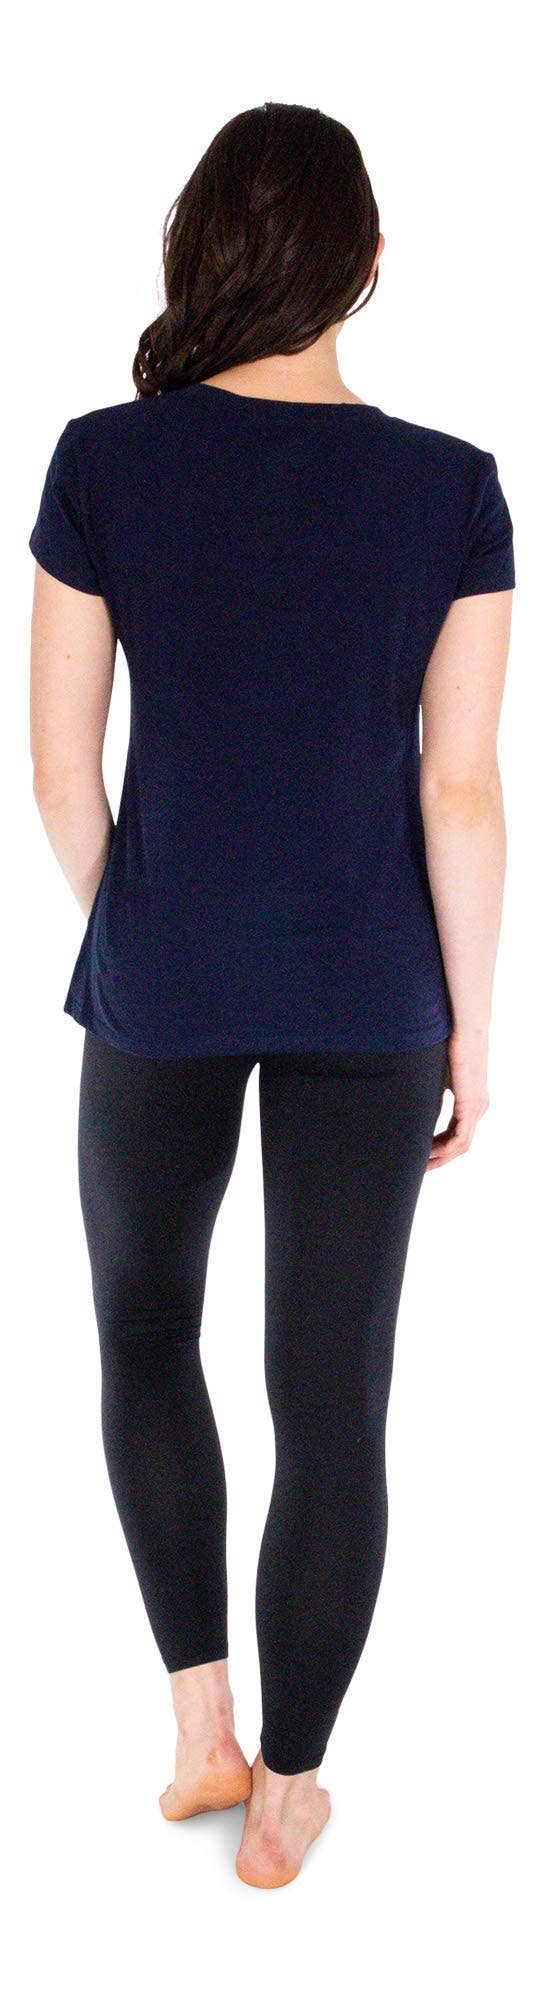 Women's Cotton Spandex Crew NeckShort Sleeve T-Shirt Light Blue